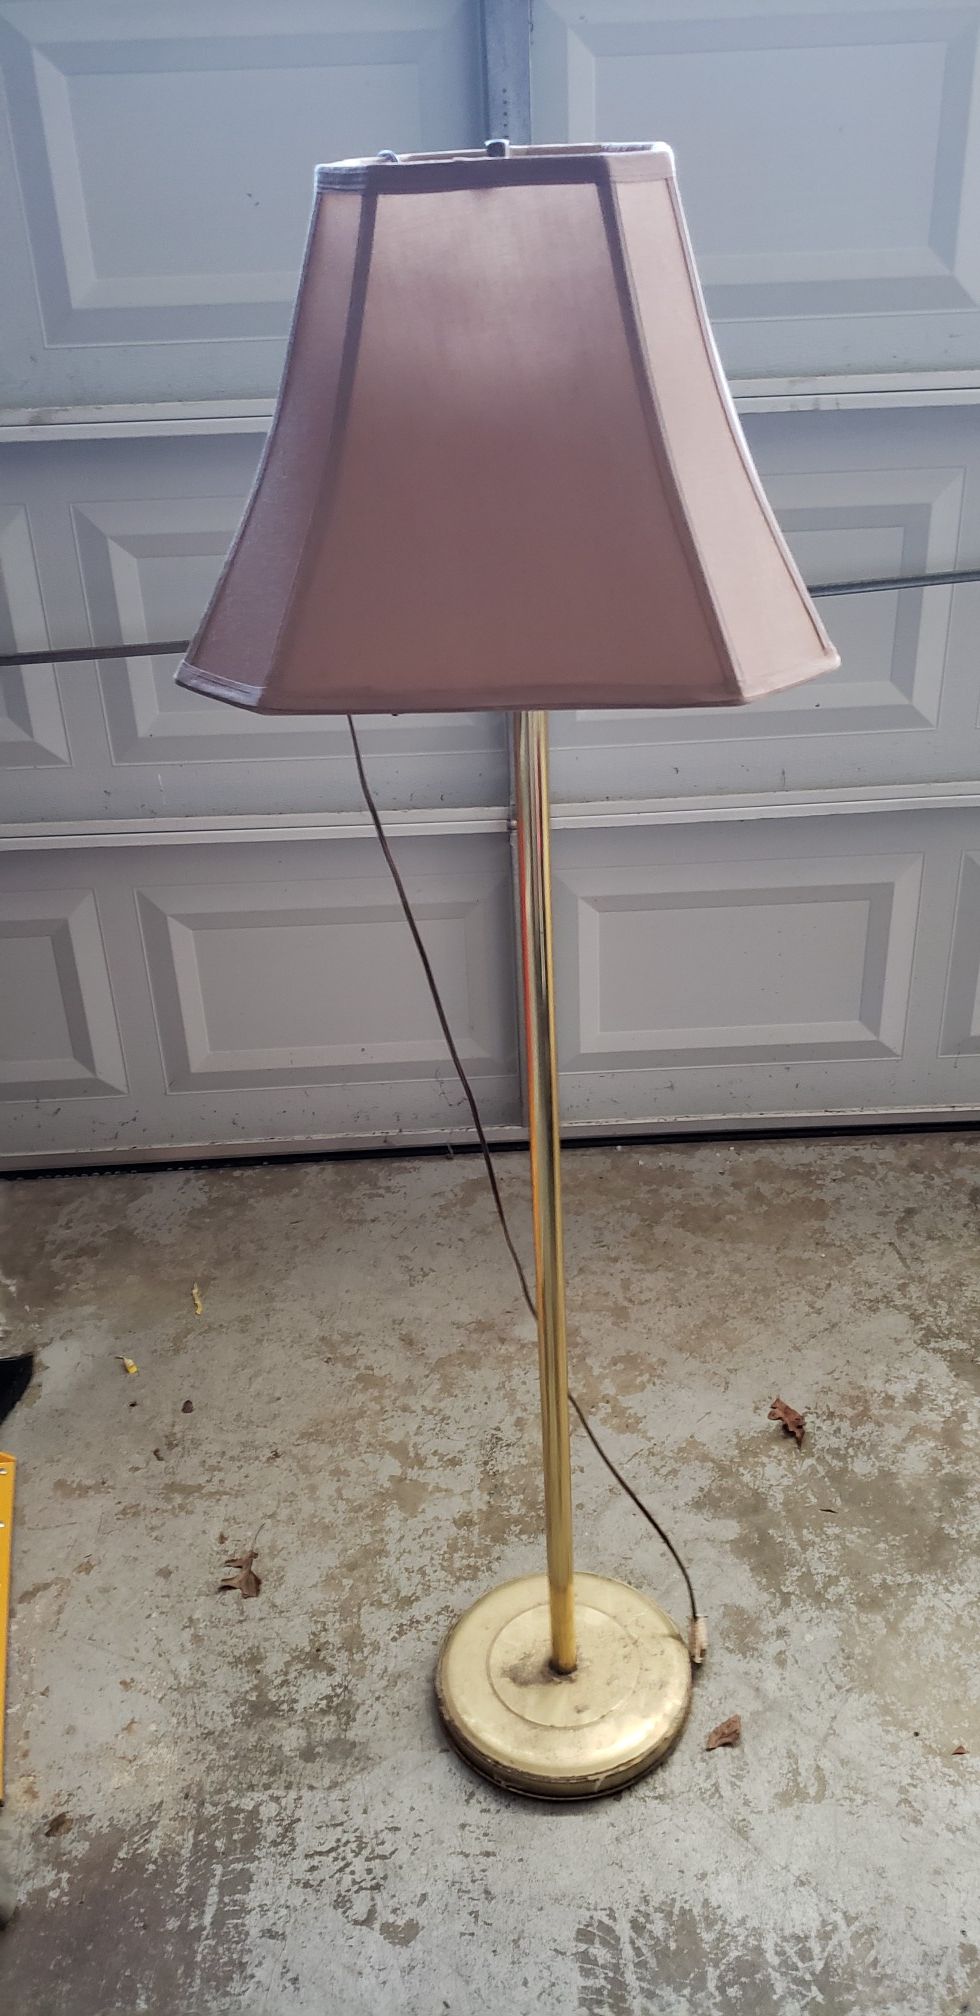 Tall 54" Floor Lamp - 3-way lighting